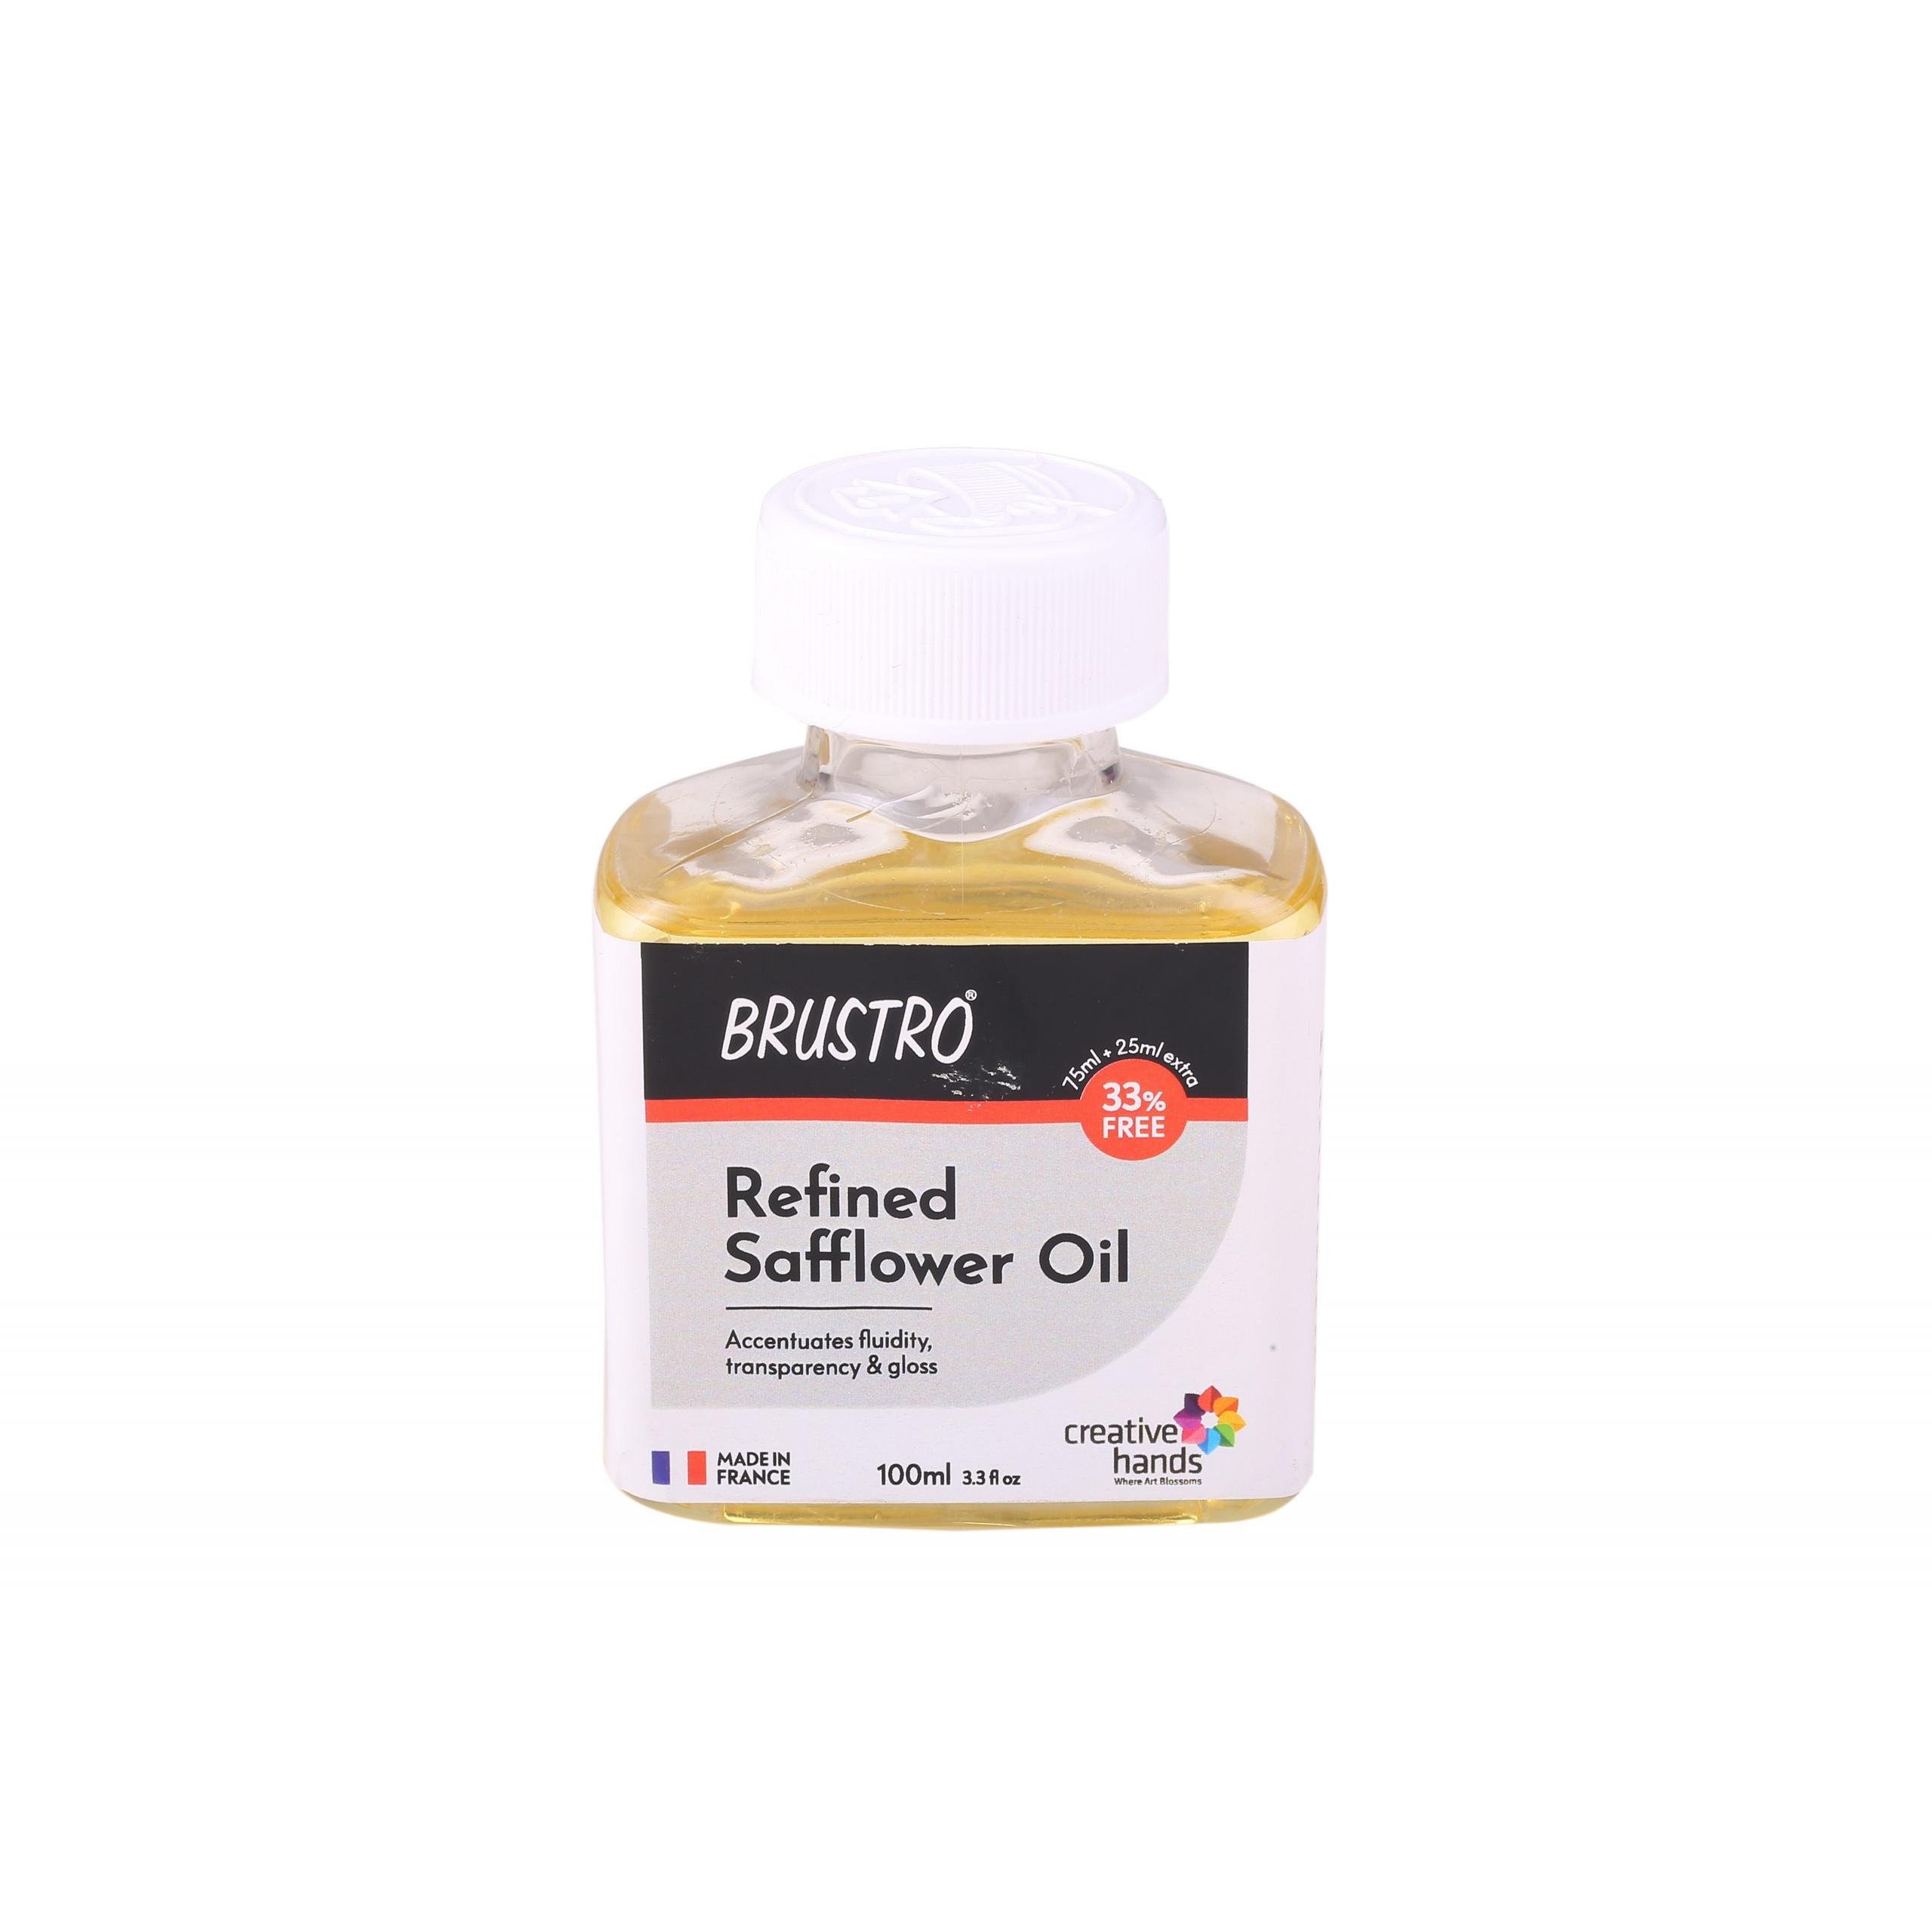 Brustro Professional Refined Safflower Oil 100ml (75ml + 25ml Free)